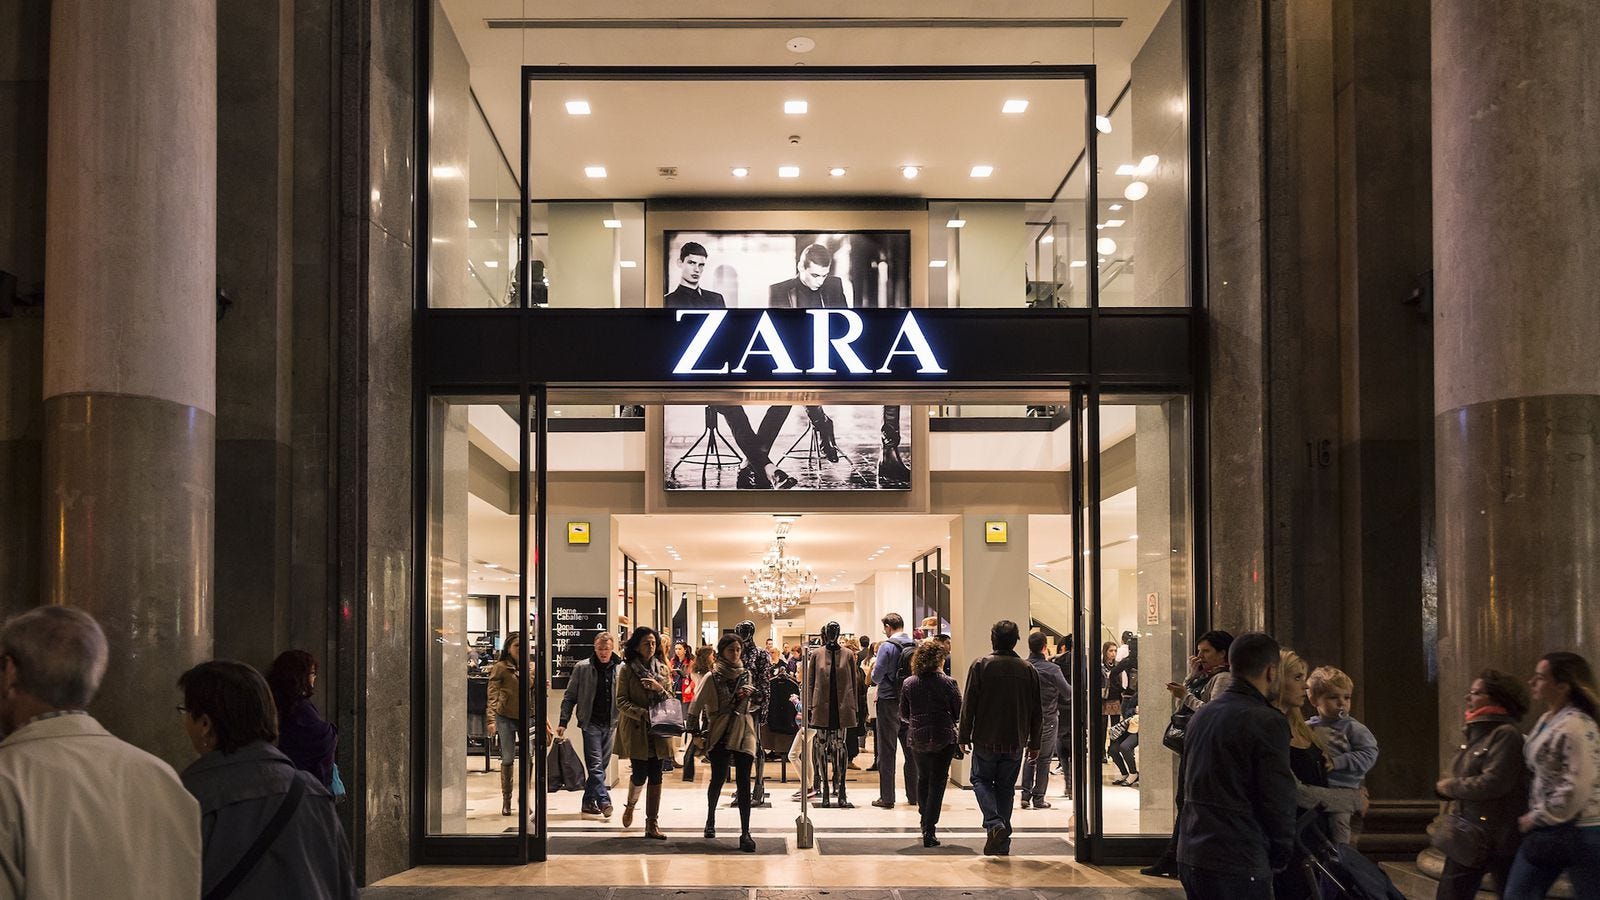 ZARA — A UI/UX Case Study. Redesigning Zara.com | by Adam Teller | Medium